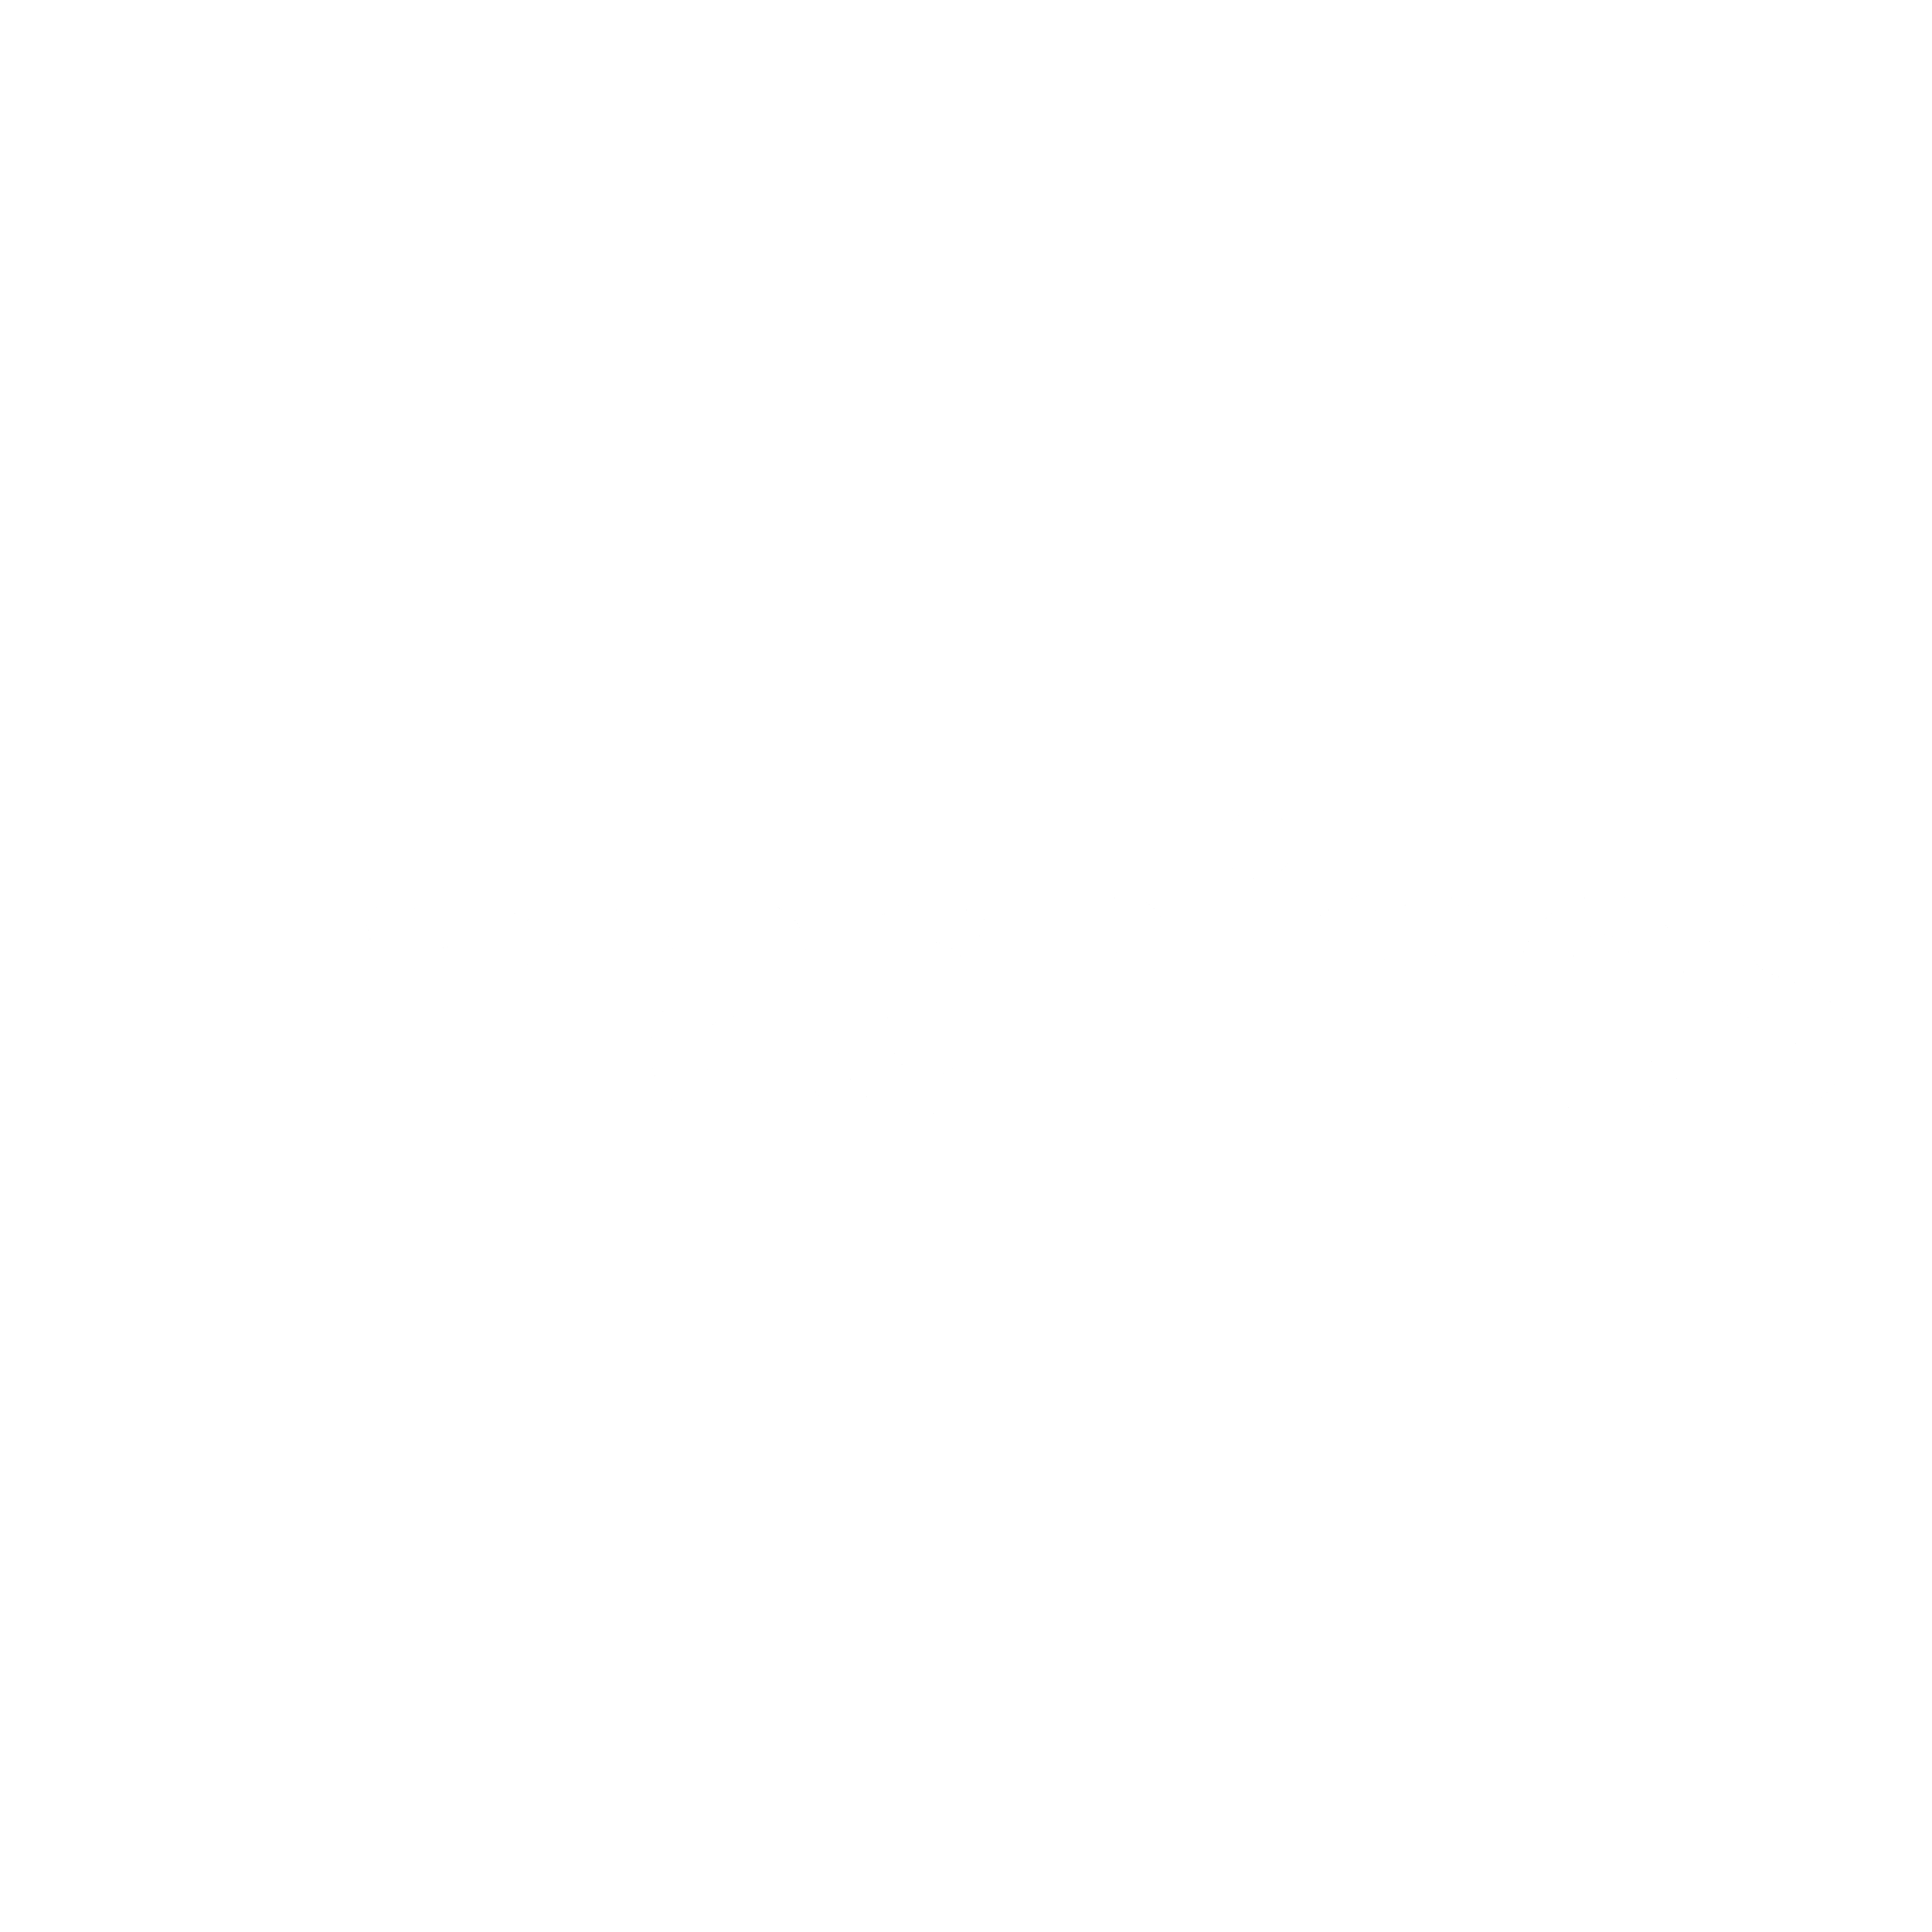 eMachines Logo - eMachines Logo PNG Transparent & SVG Vector